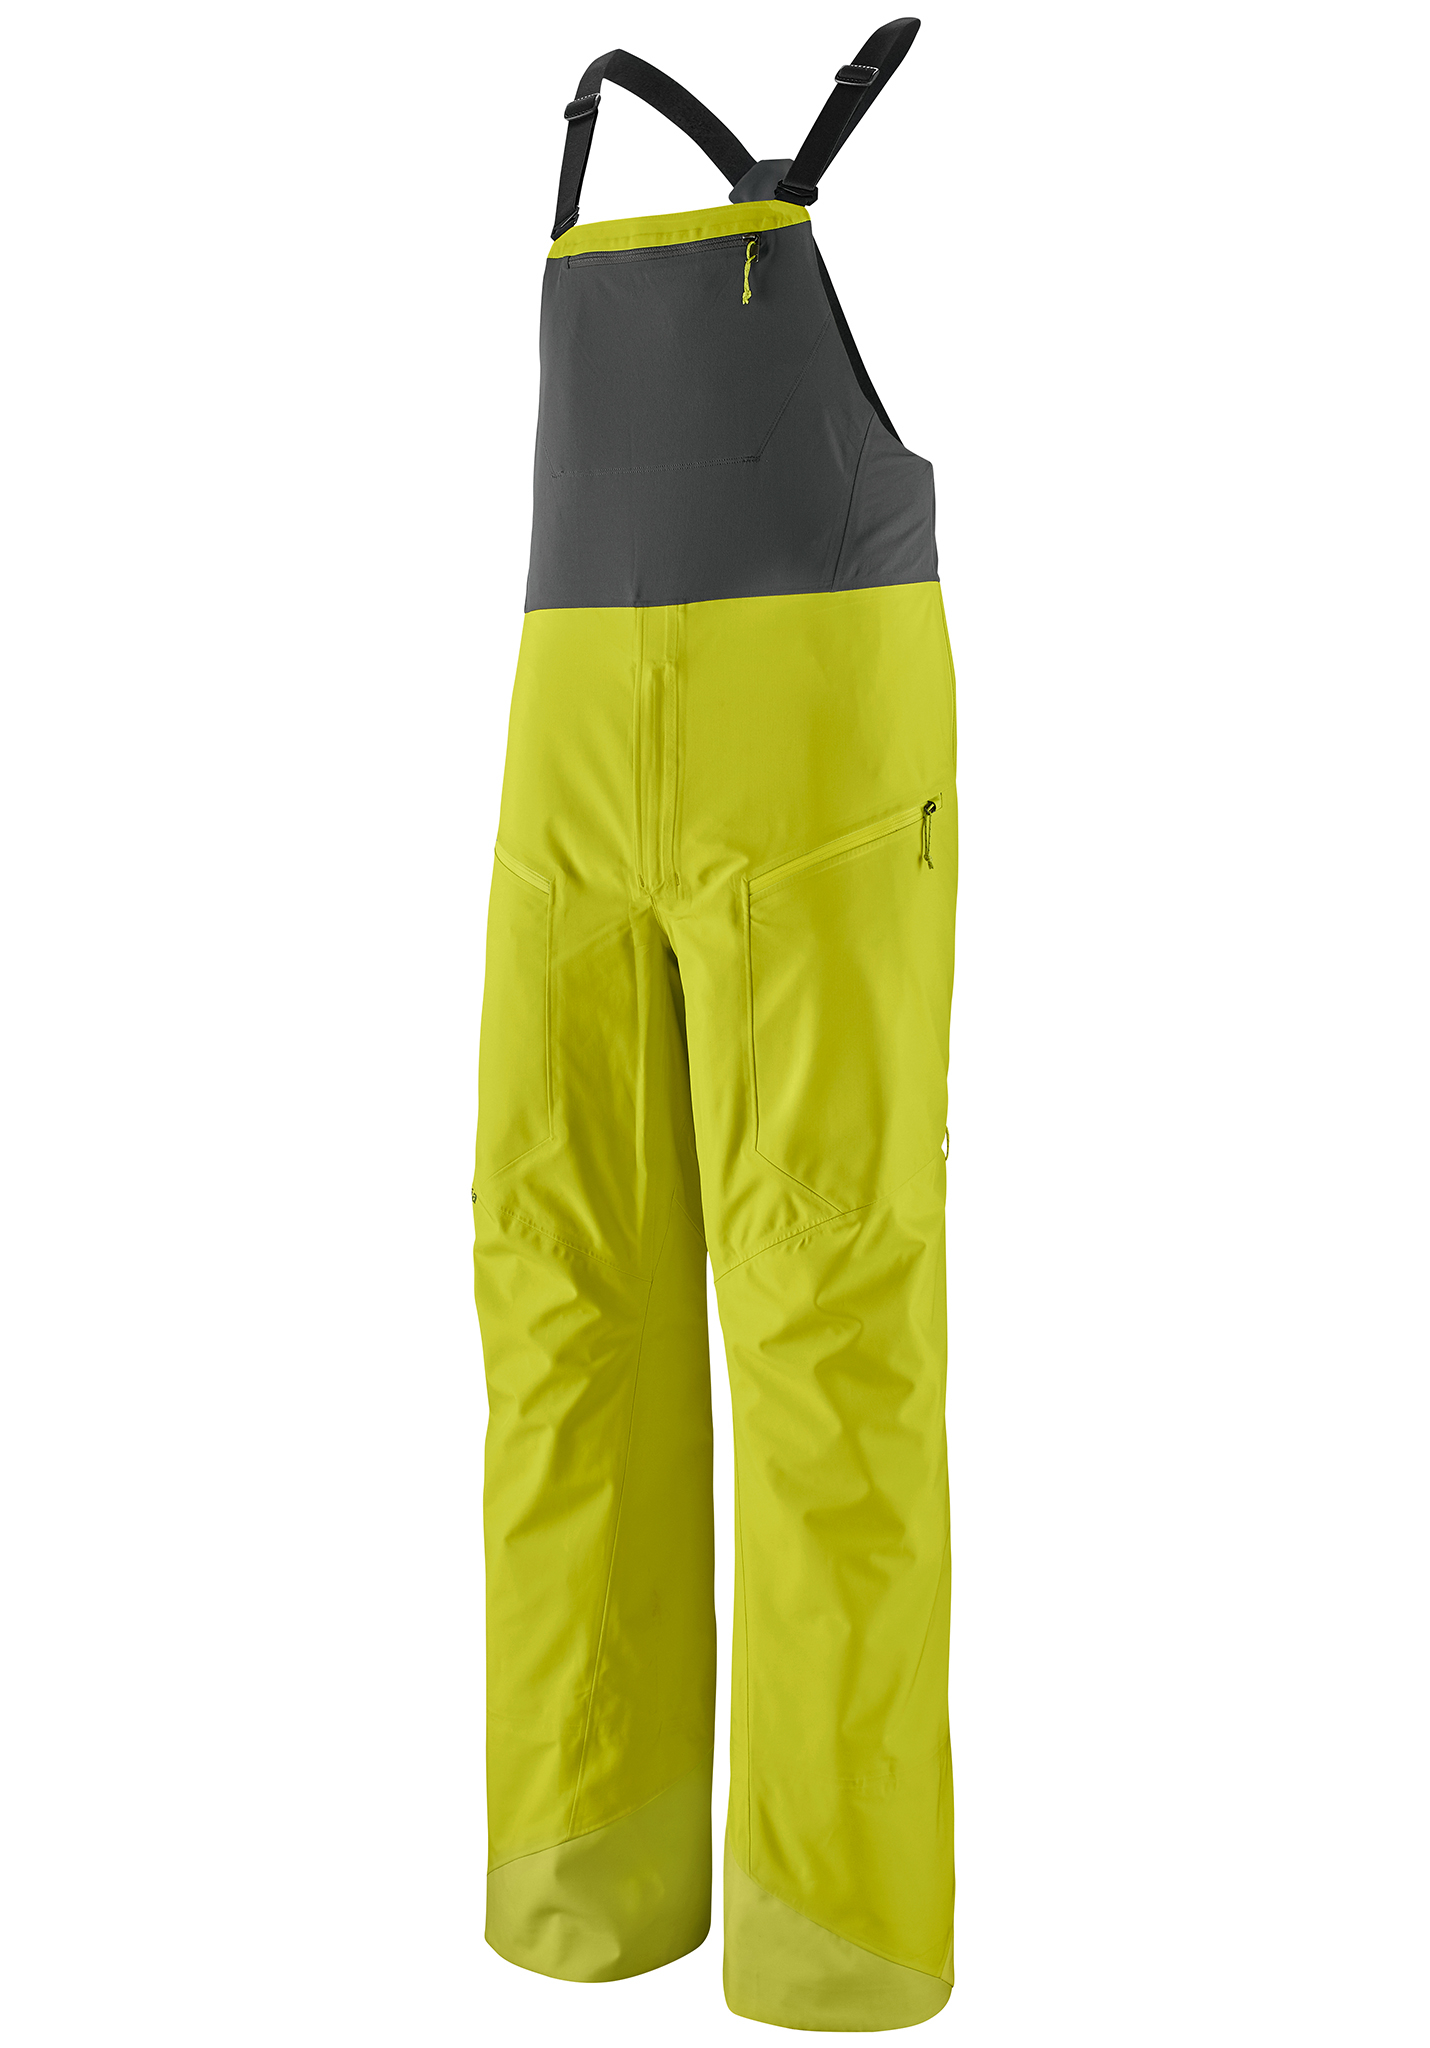 Patagonia Snowdrifter Bibs Snowboardhosen yellow XL